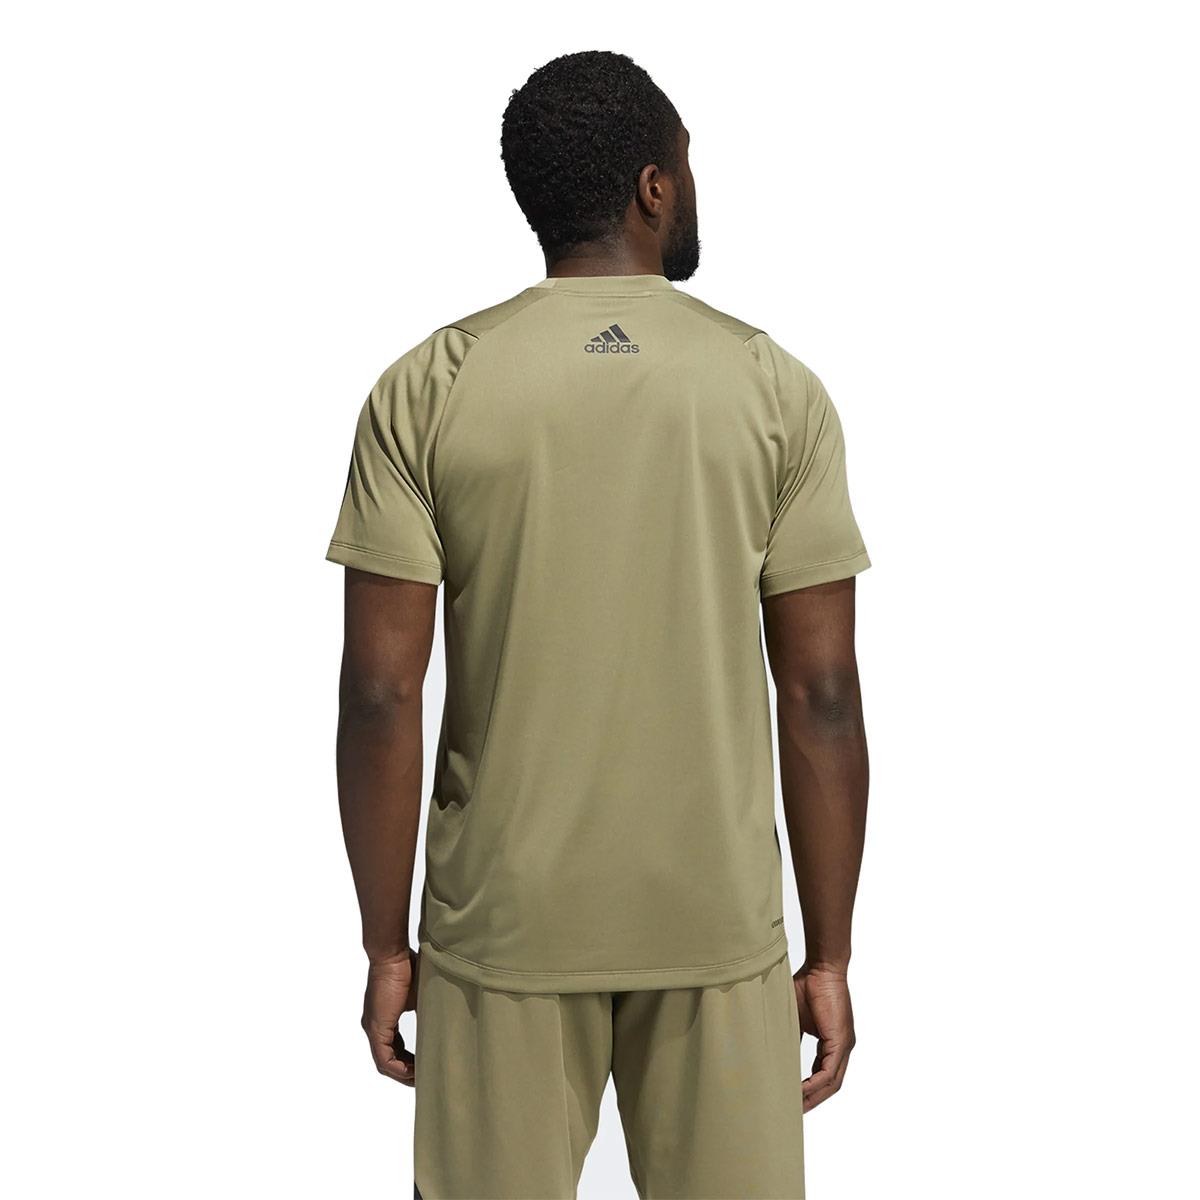 Adidas - T-shirt Freelift pour homme - Vert